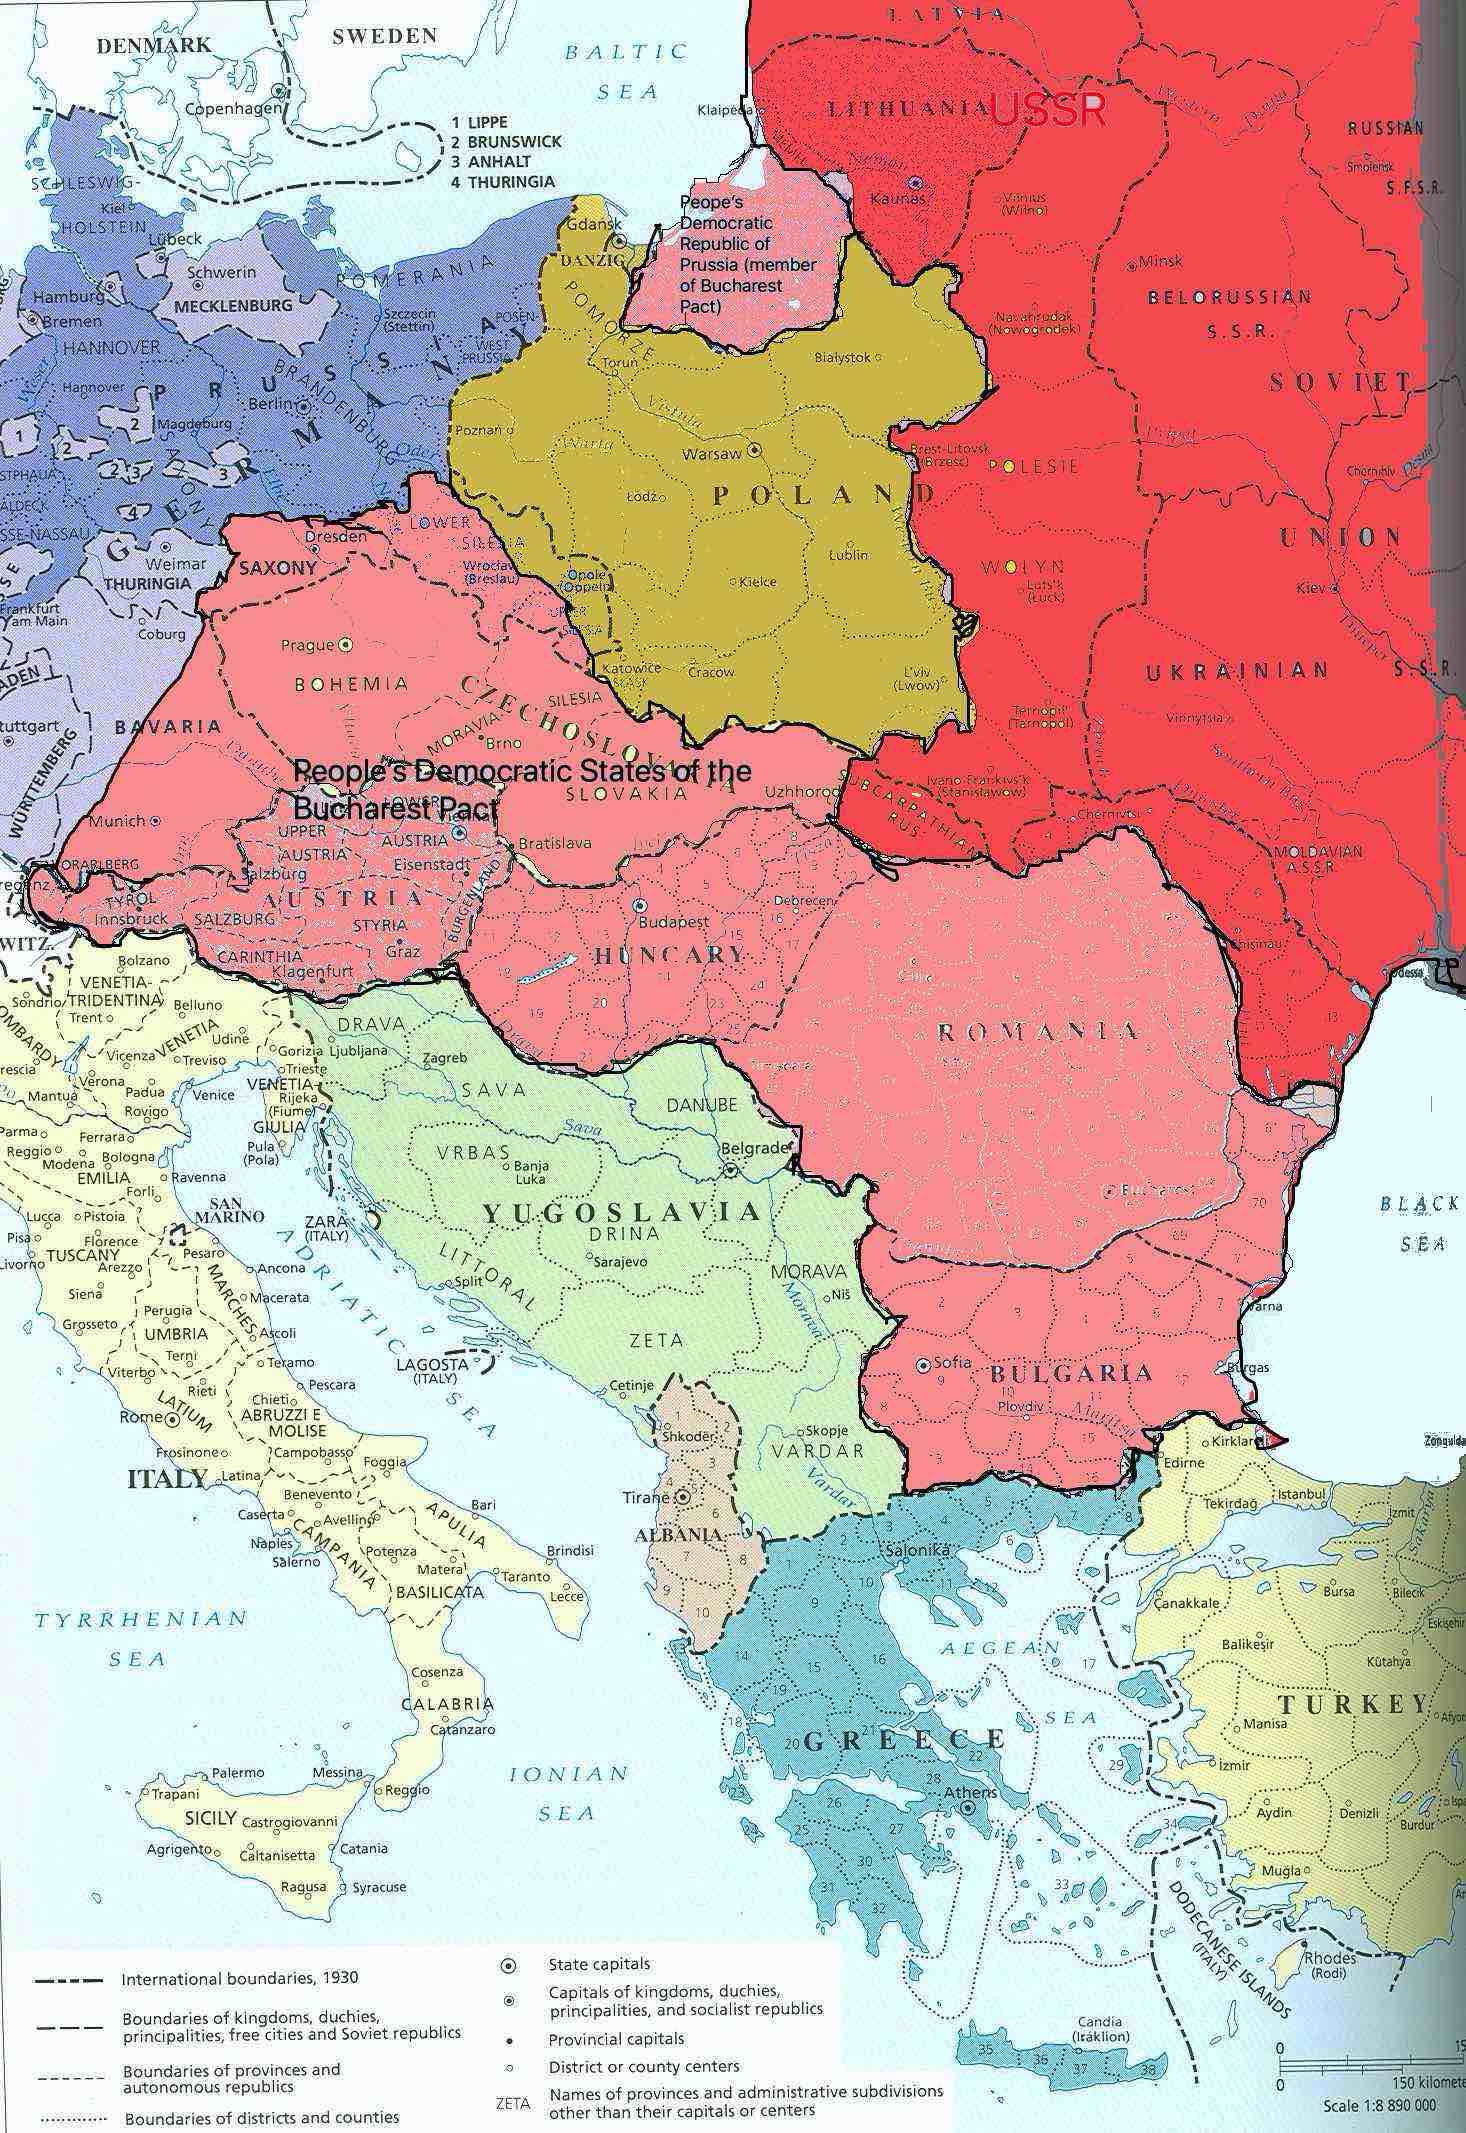 Europe-East-Central-1945 -altered.jpg